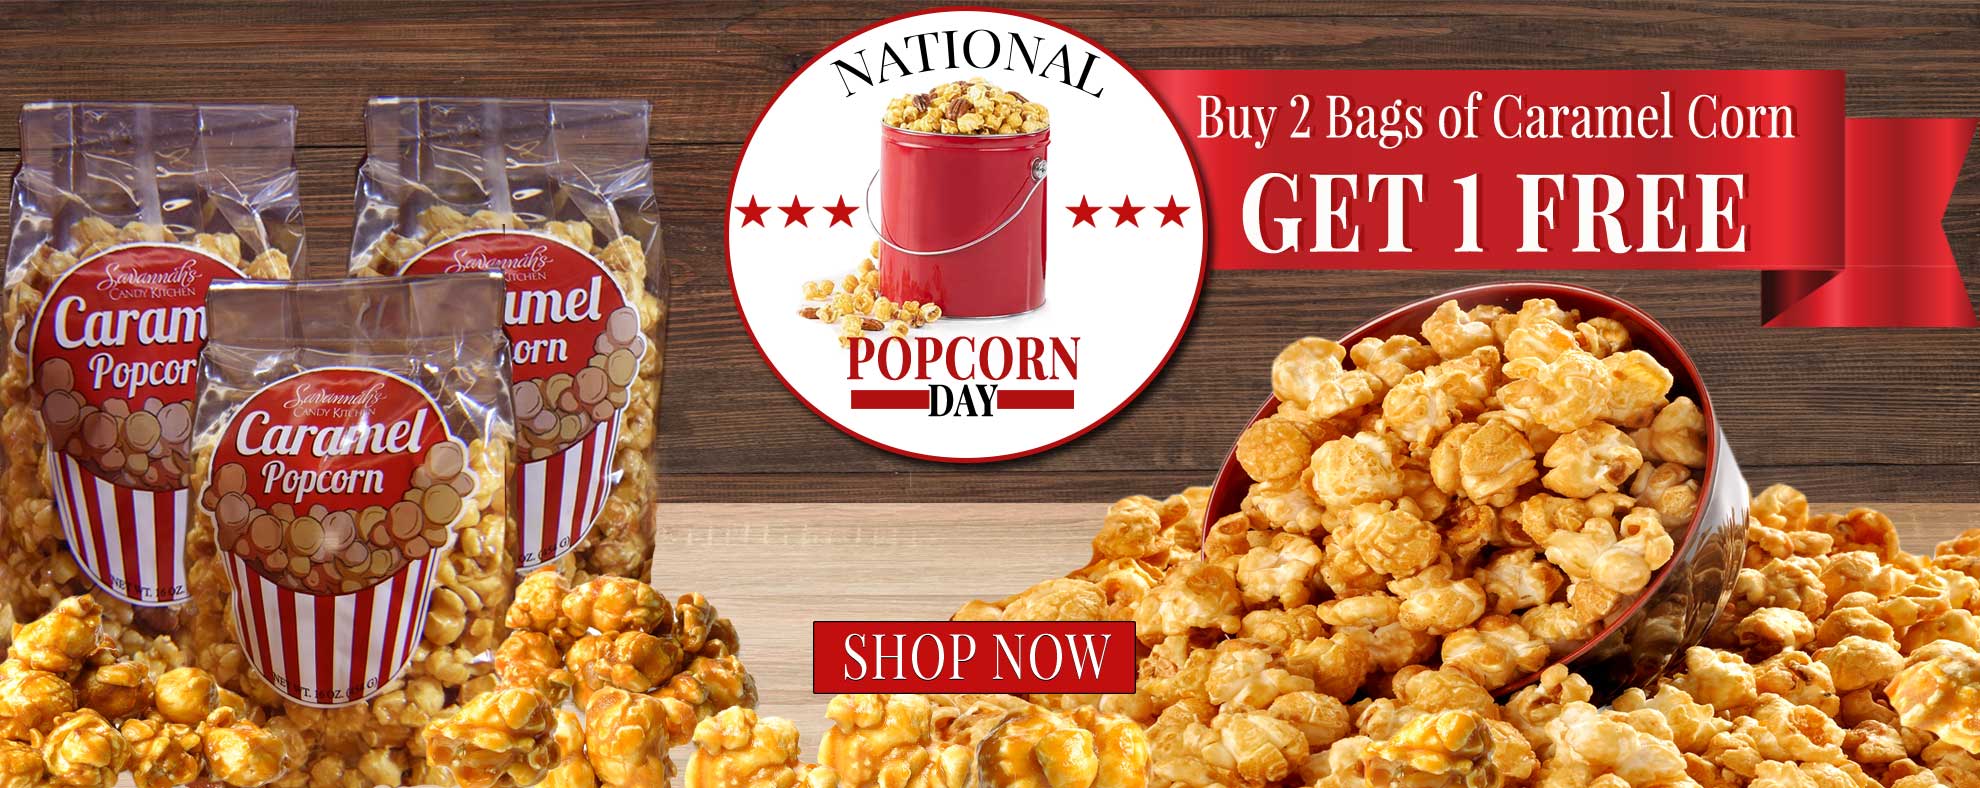 National Popcorn Day Offer